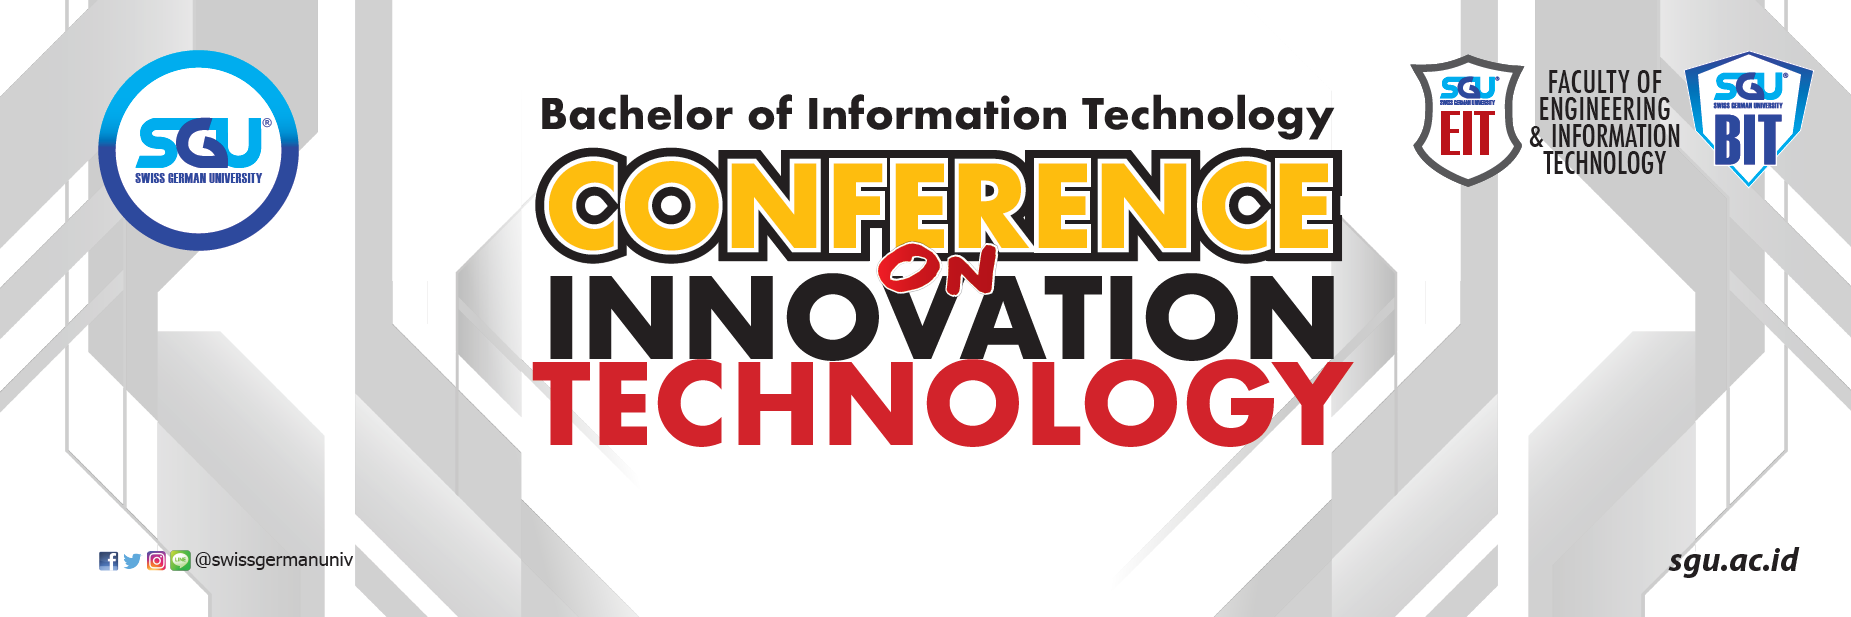 Conference on Innovation Technology by Bachelor of Information Technology